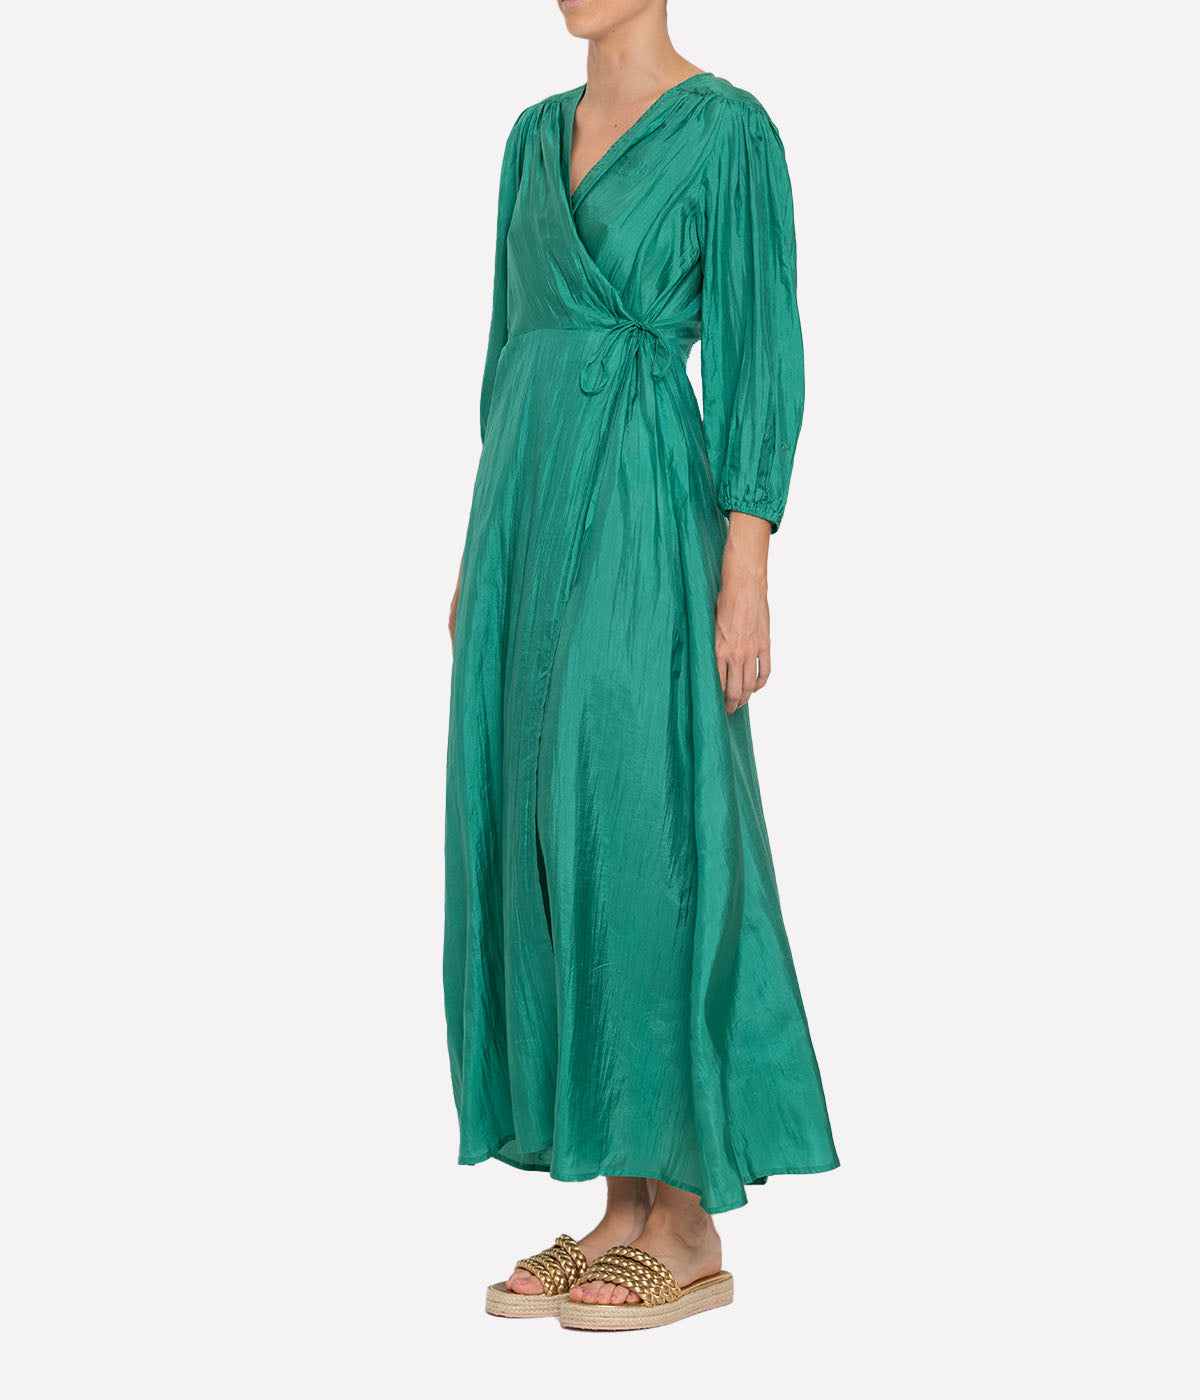 Wrap Around Dress in Green